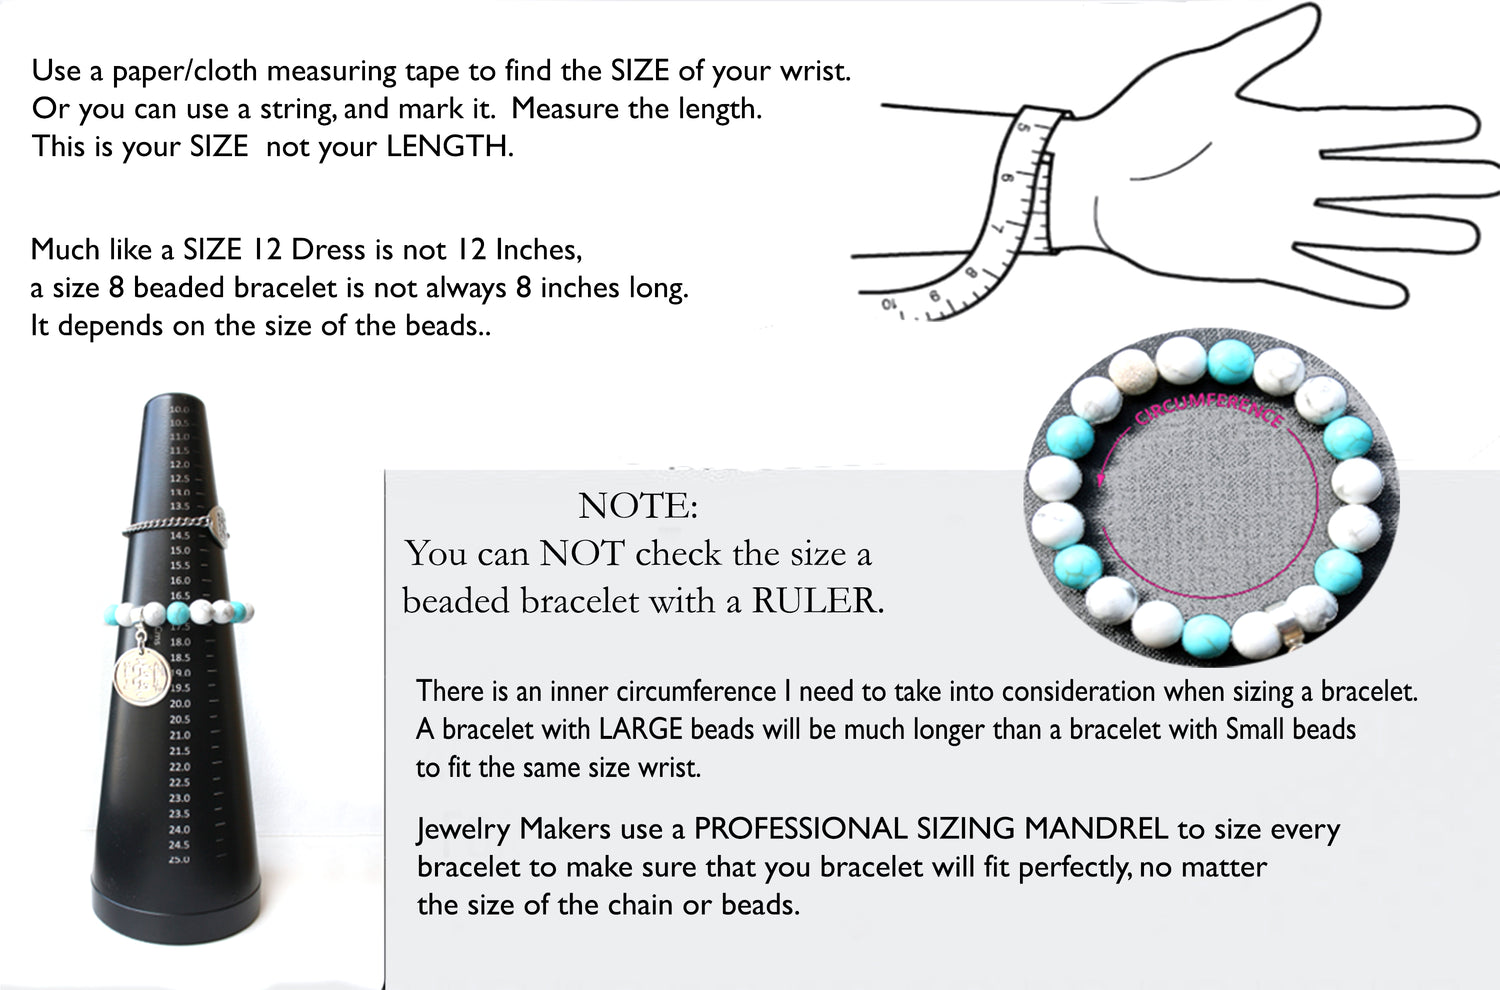 Mens Bracelet, DZI Evil Eye Protection Bracelet, STRENGTH &amp; COURAGE Root Chakra Gemstone Crystal Healing Bracelet, Jewels for Gents